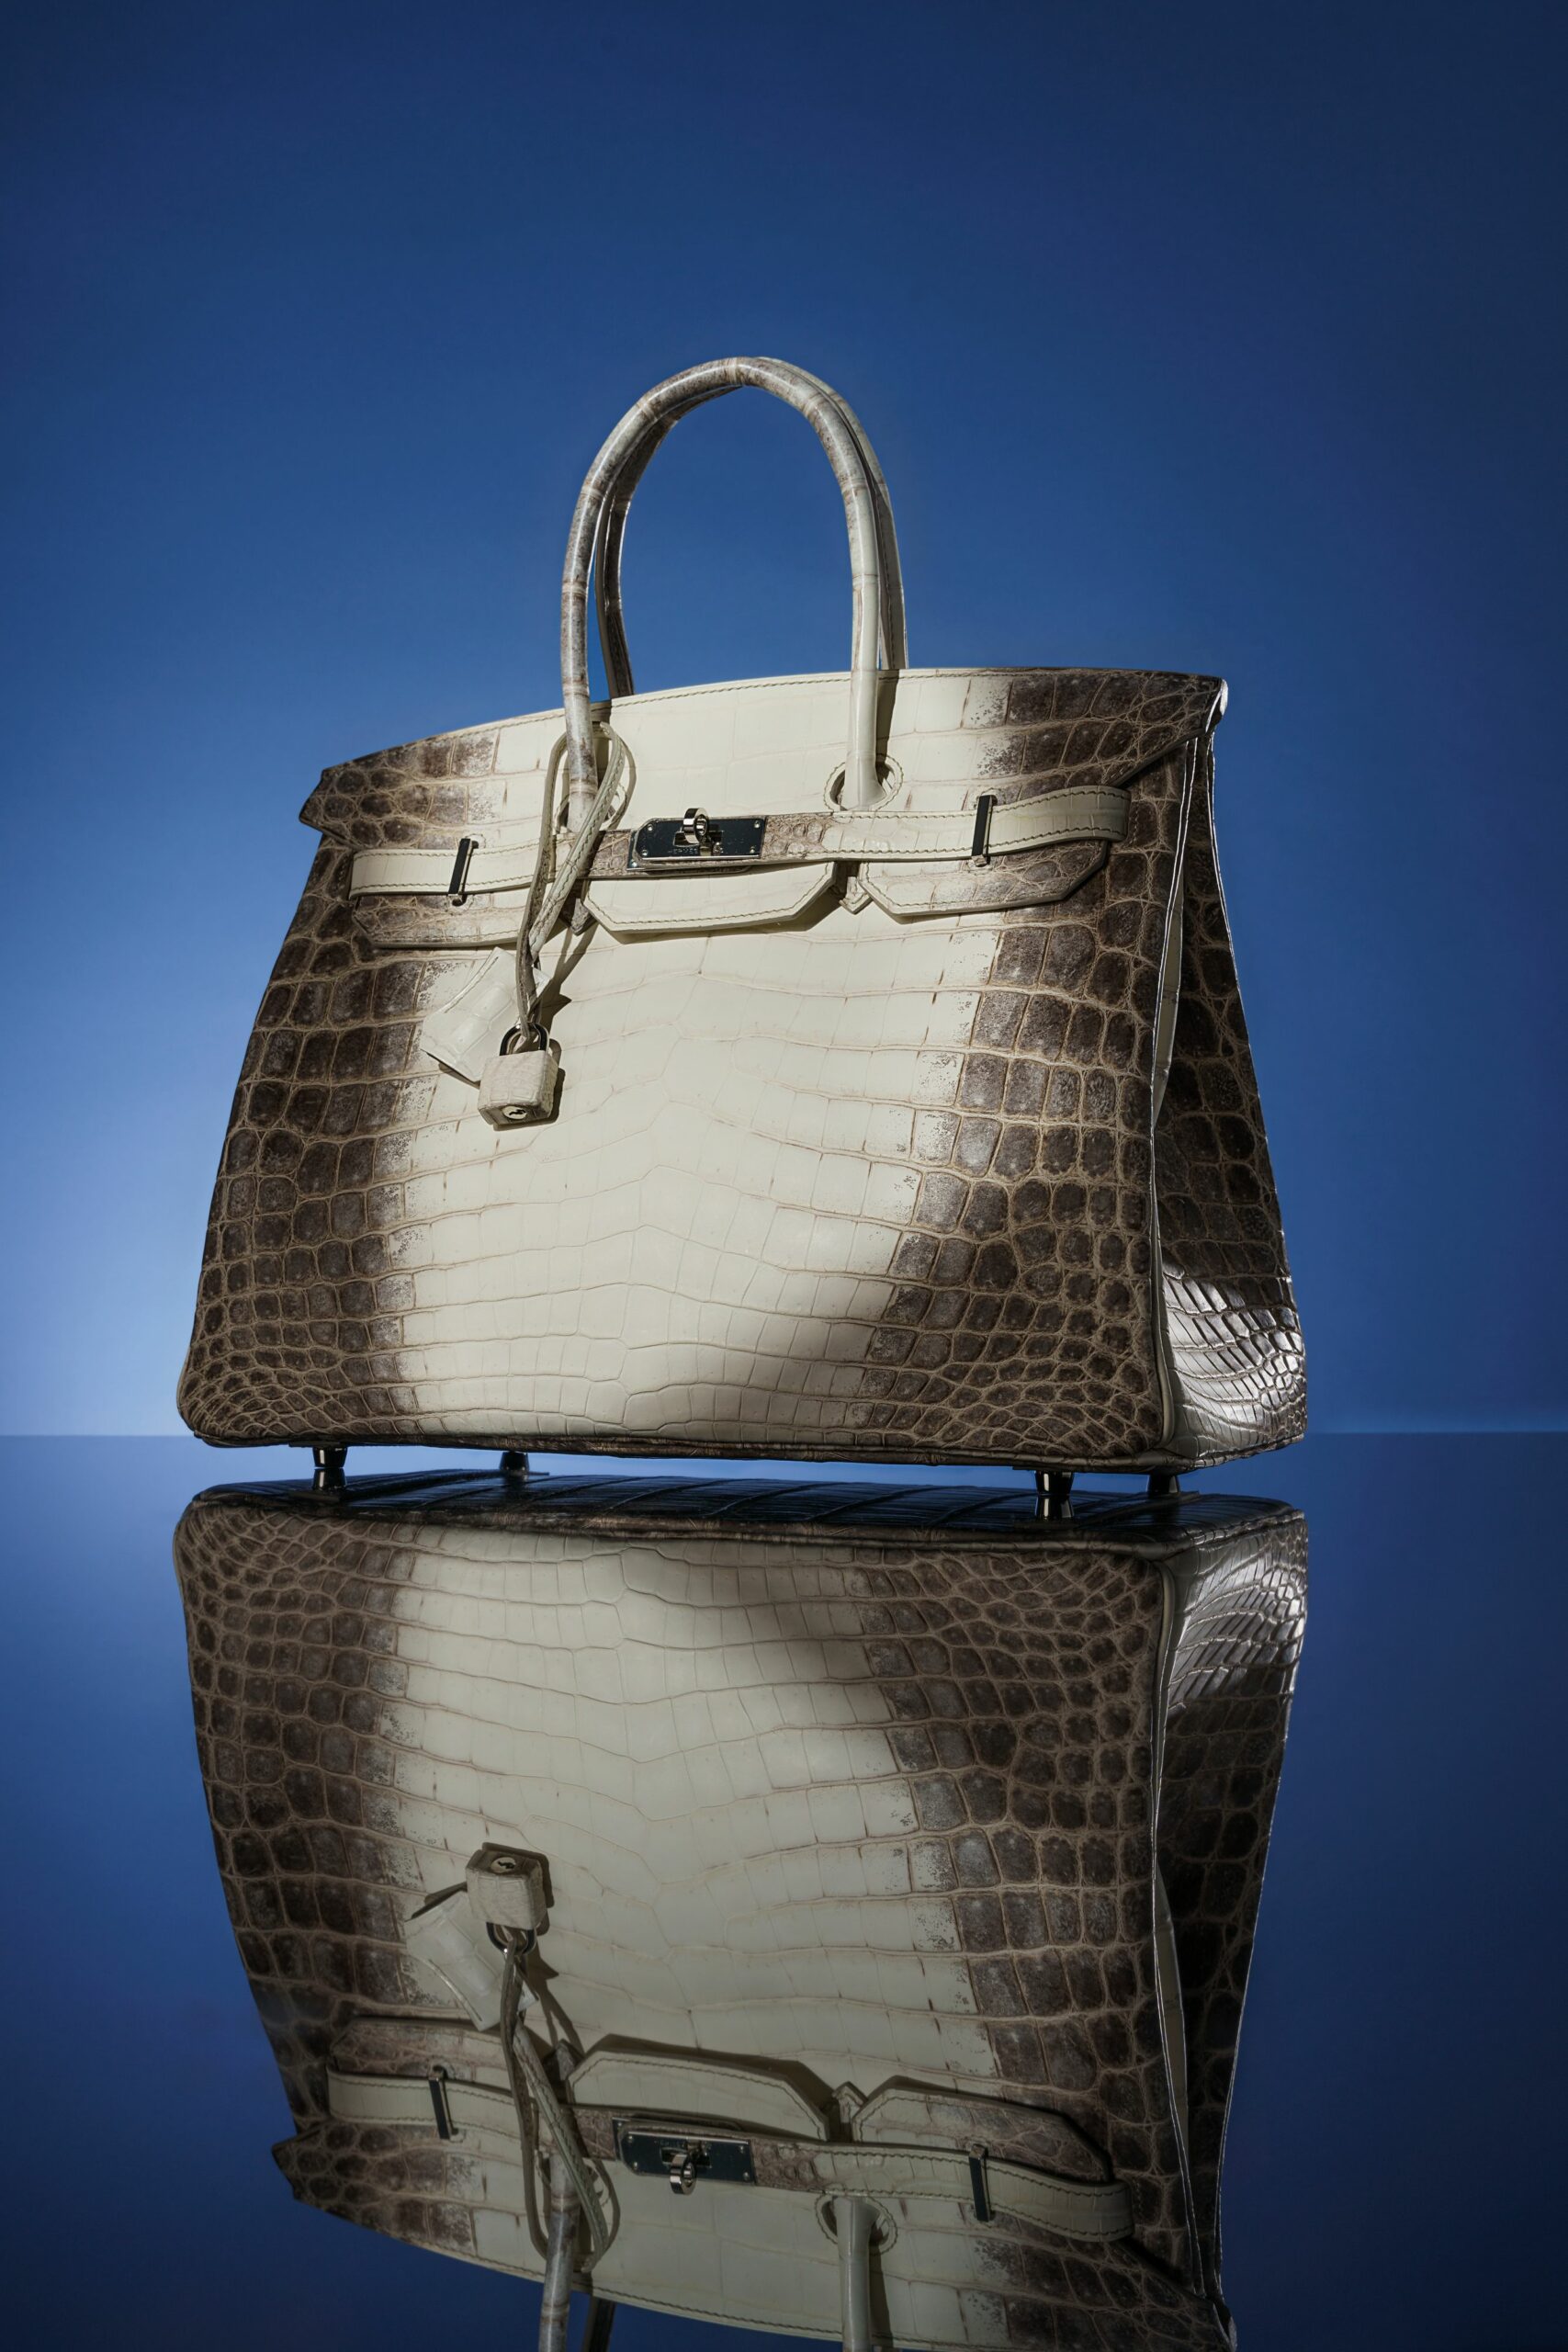 Limited Edition Hermes Birkin?? : r/handbags